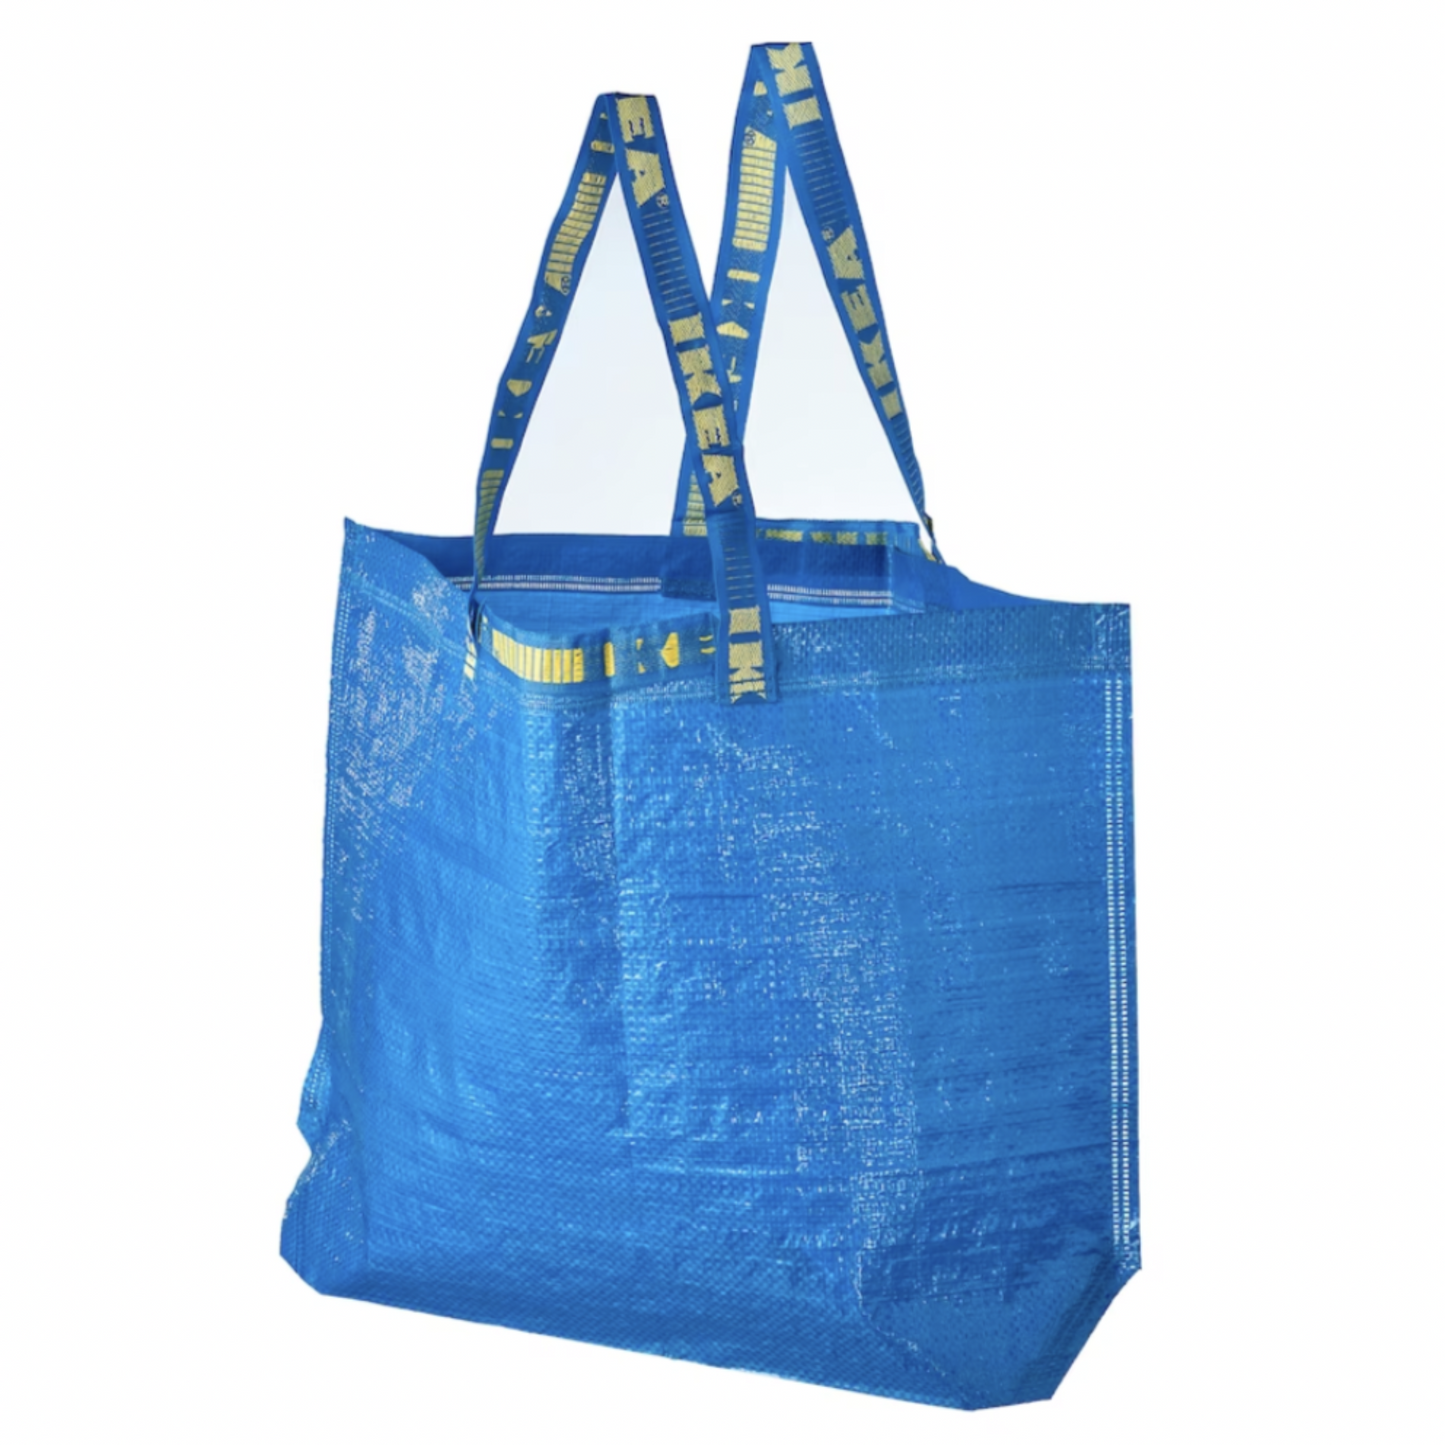 IKEA Frakta Carry Bag 36L (8119724507423)